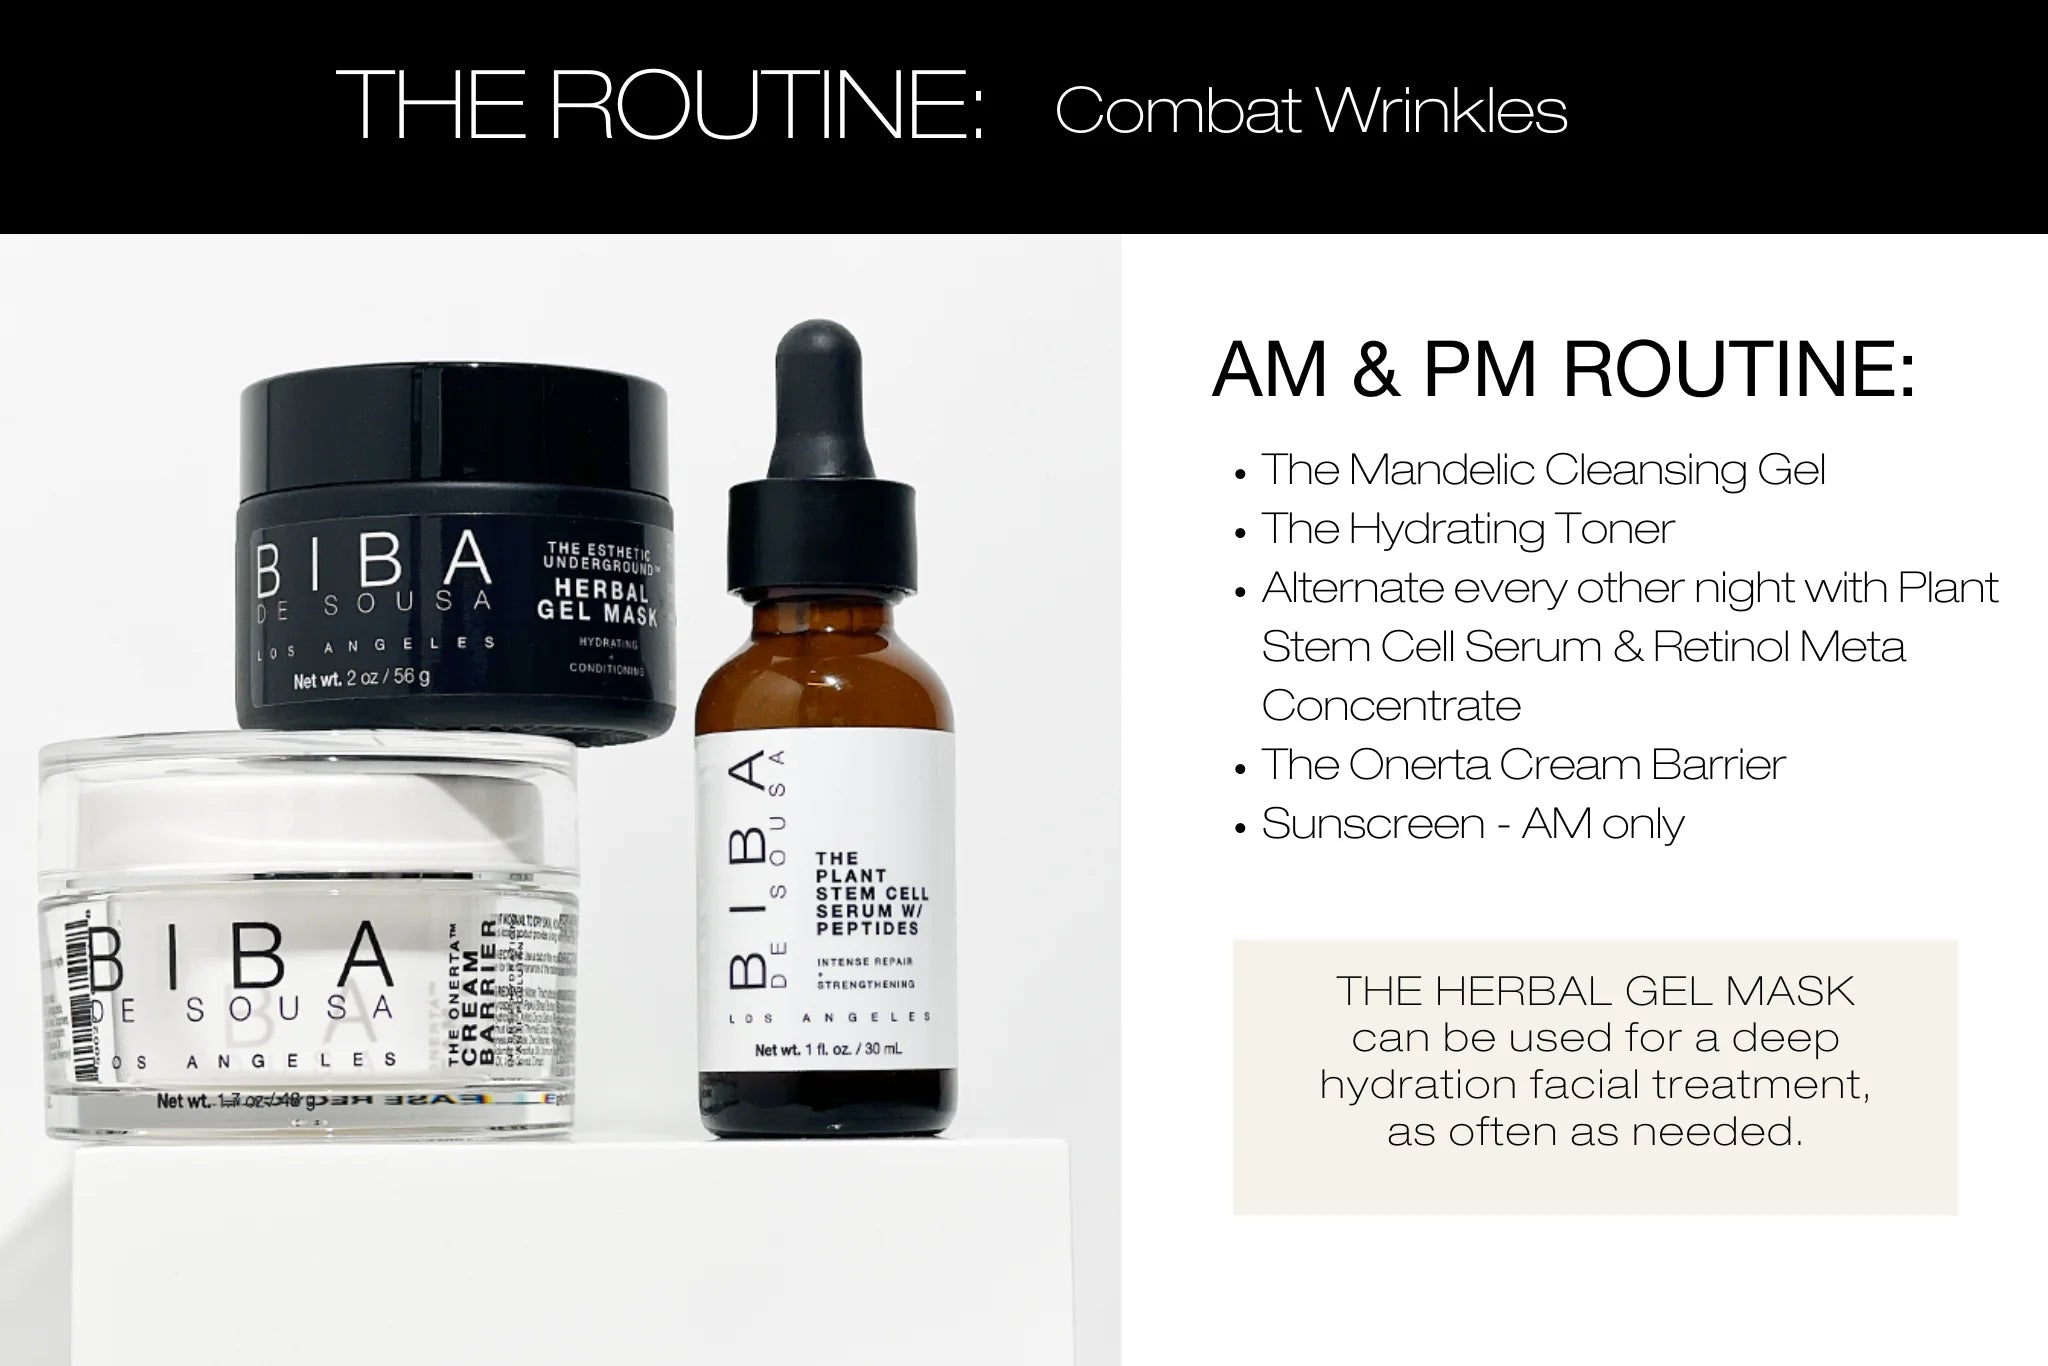 Biba's Routine to Combat Wrinkles